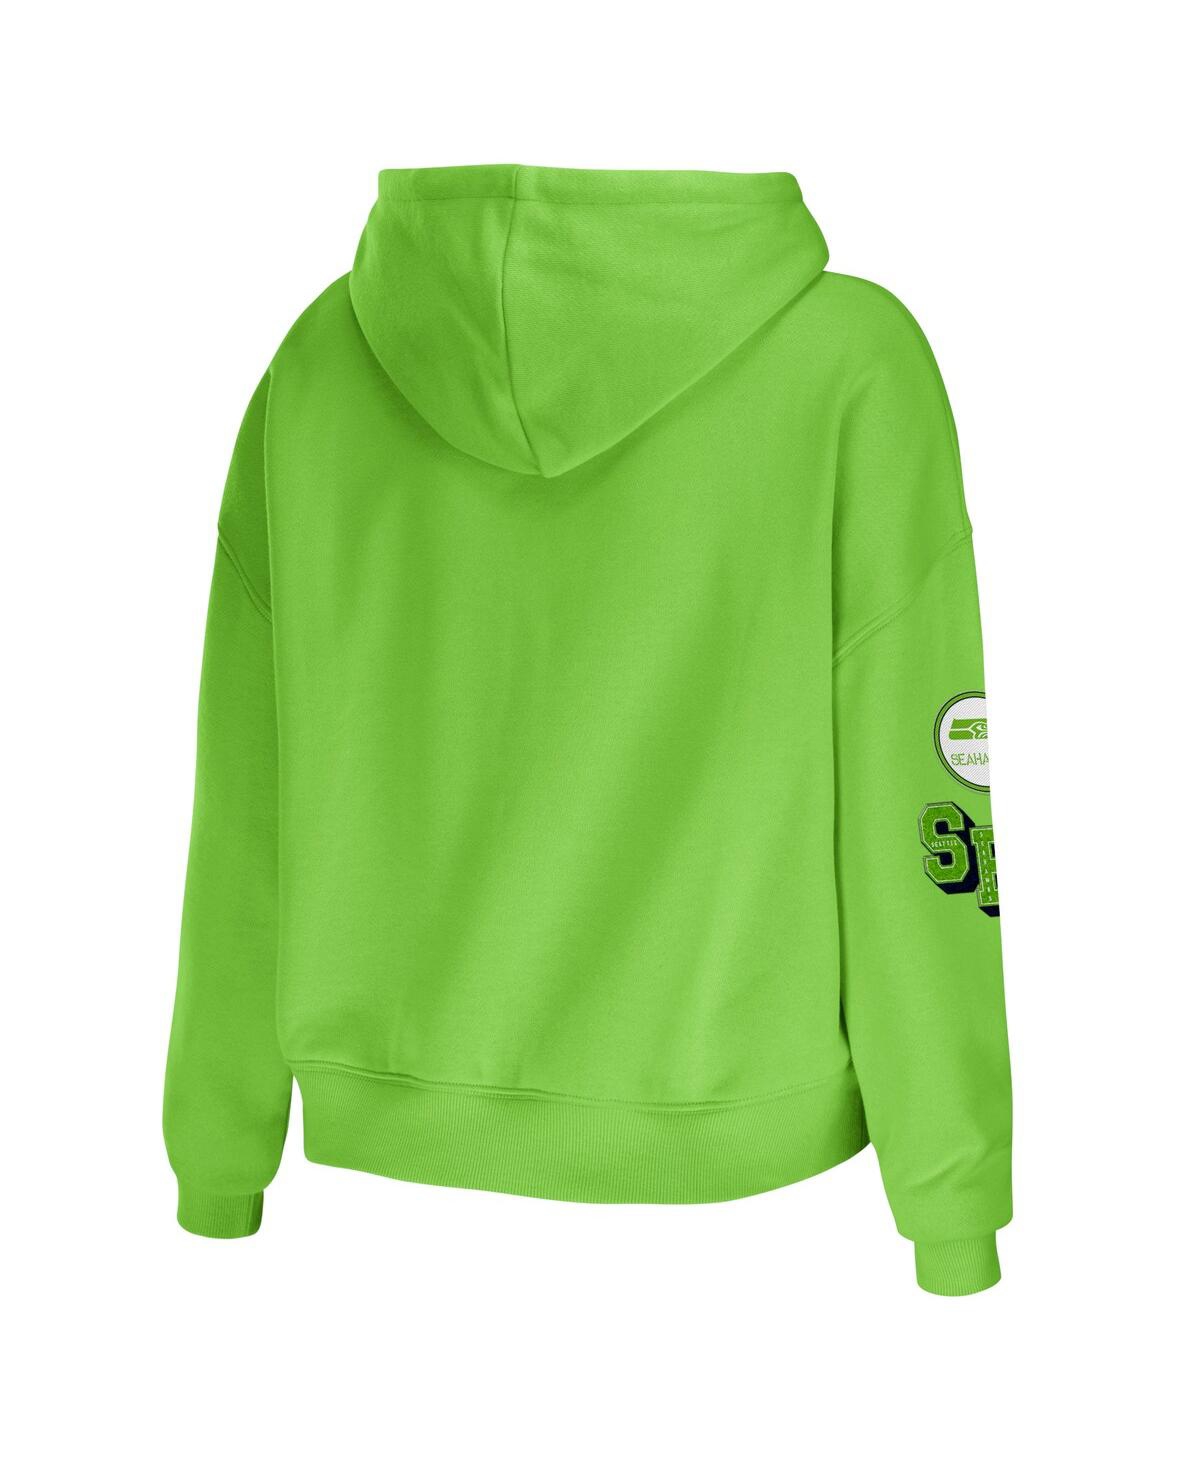 Shop Wear By Erin Andrews Women's  Neon Green Seattle Seahawks Modest Cropped Pullover Hoodie